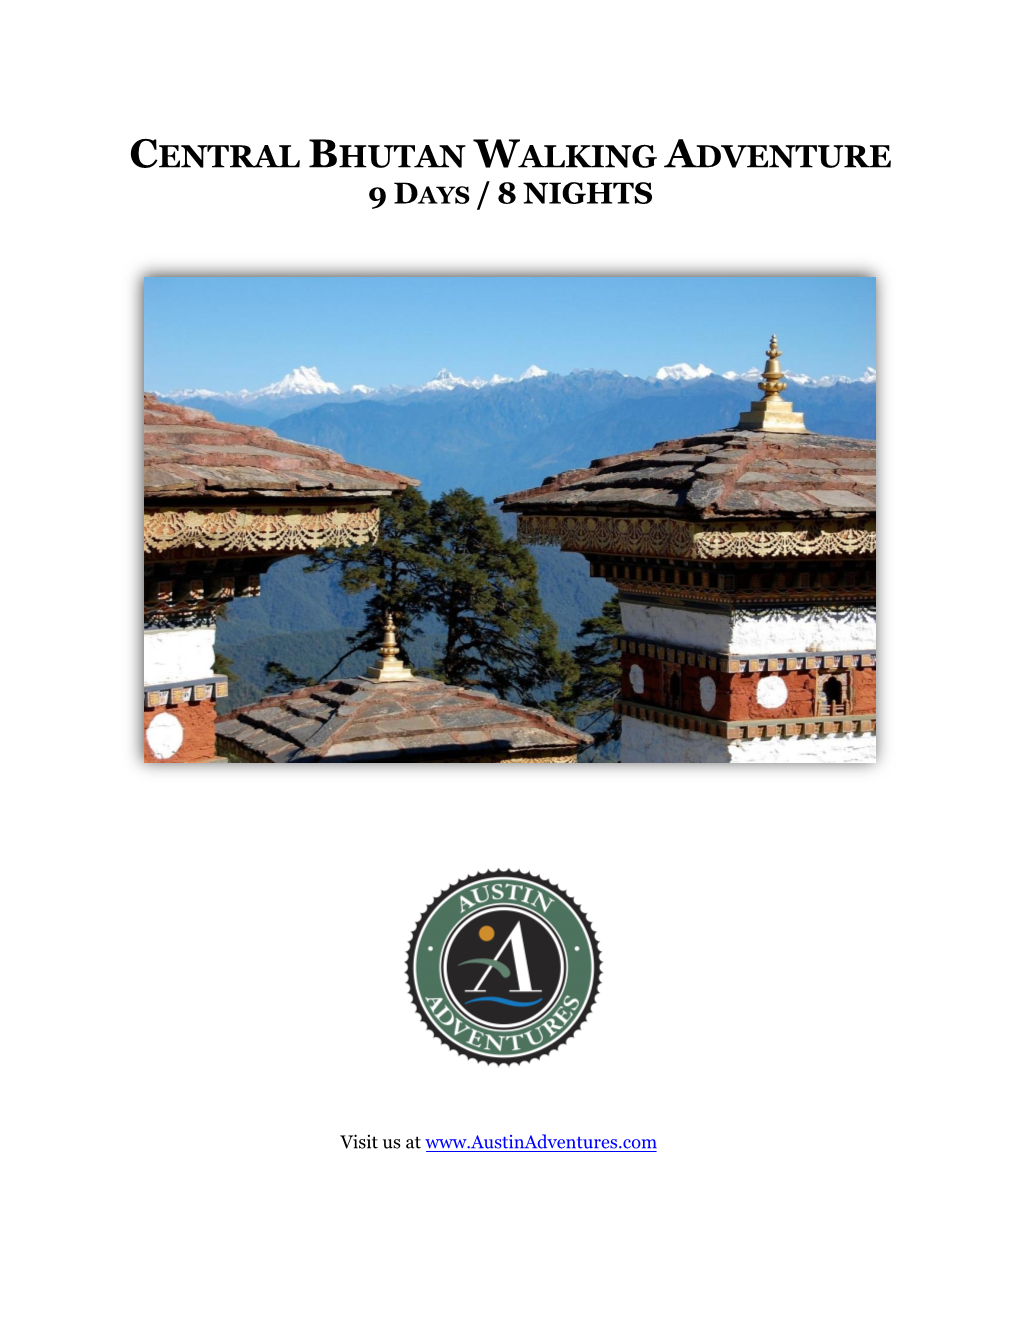 Central Bhutan Walking Adventure 9 Days / 8 Nights